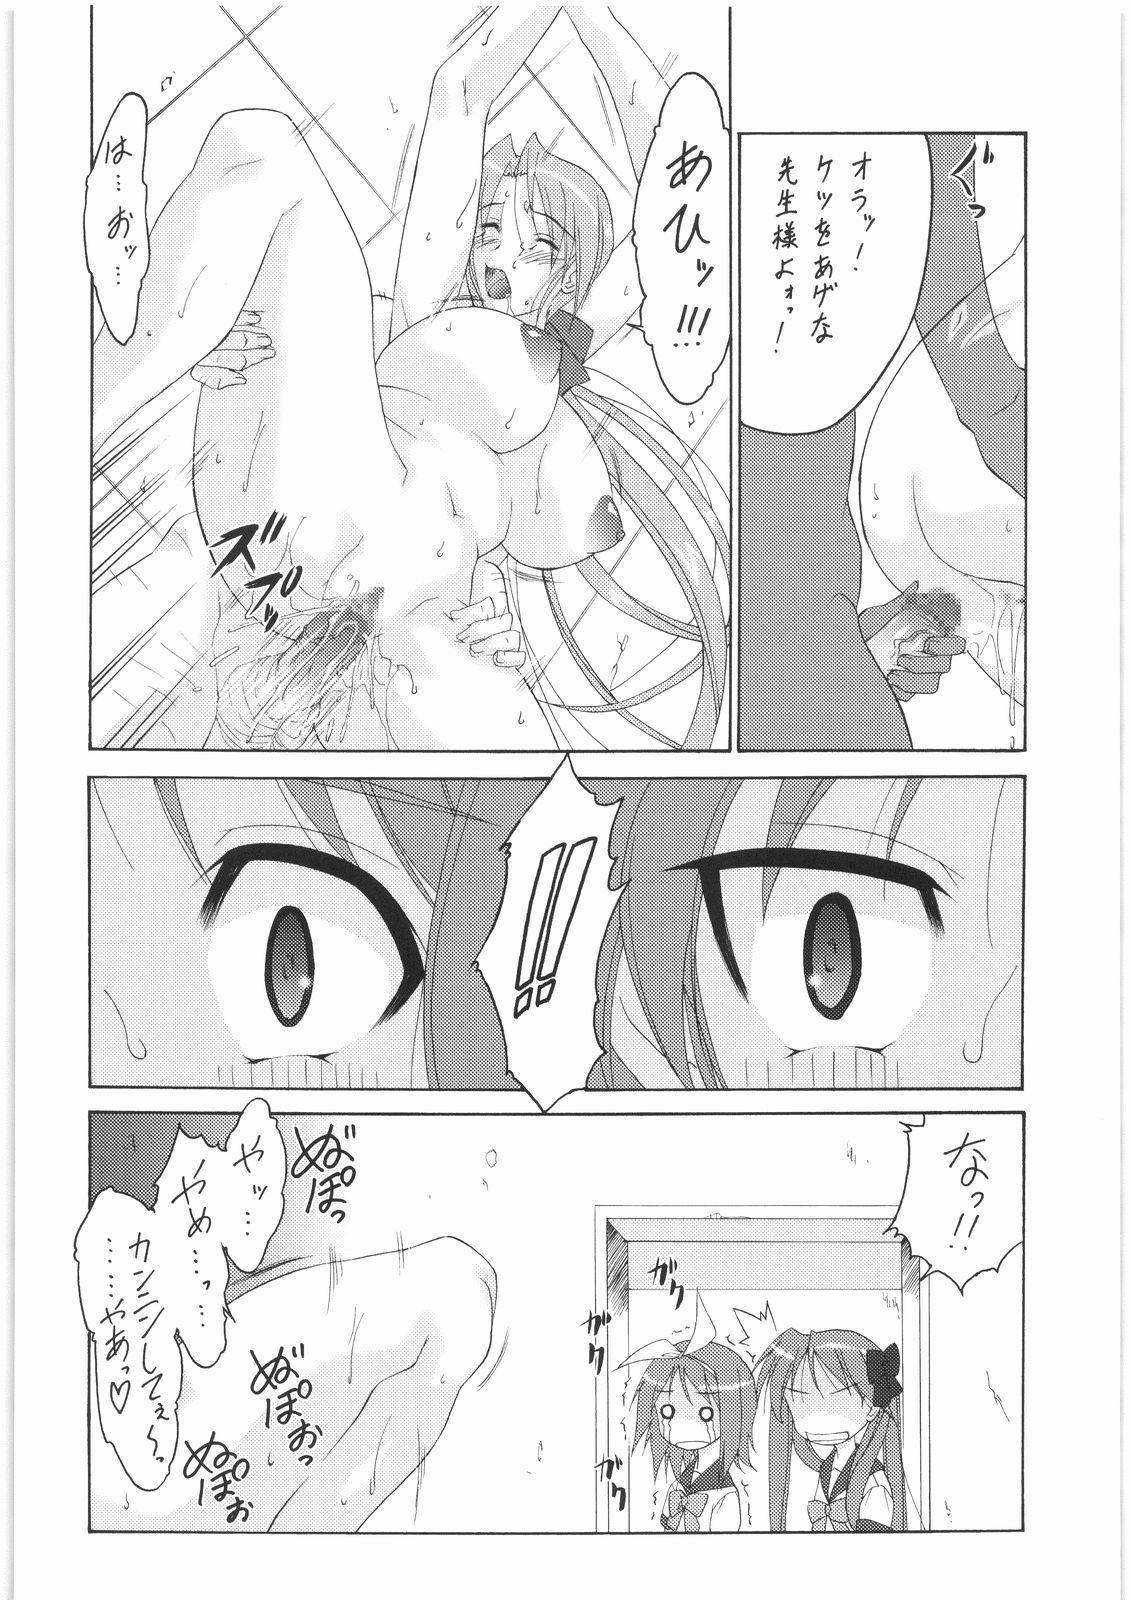 Hole Konata no Maruhi Baito - Lucky star Machine - Page 7